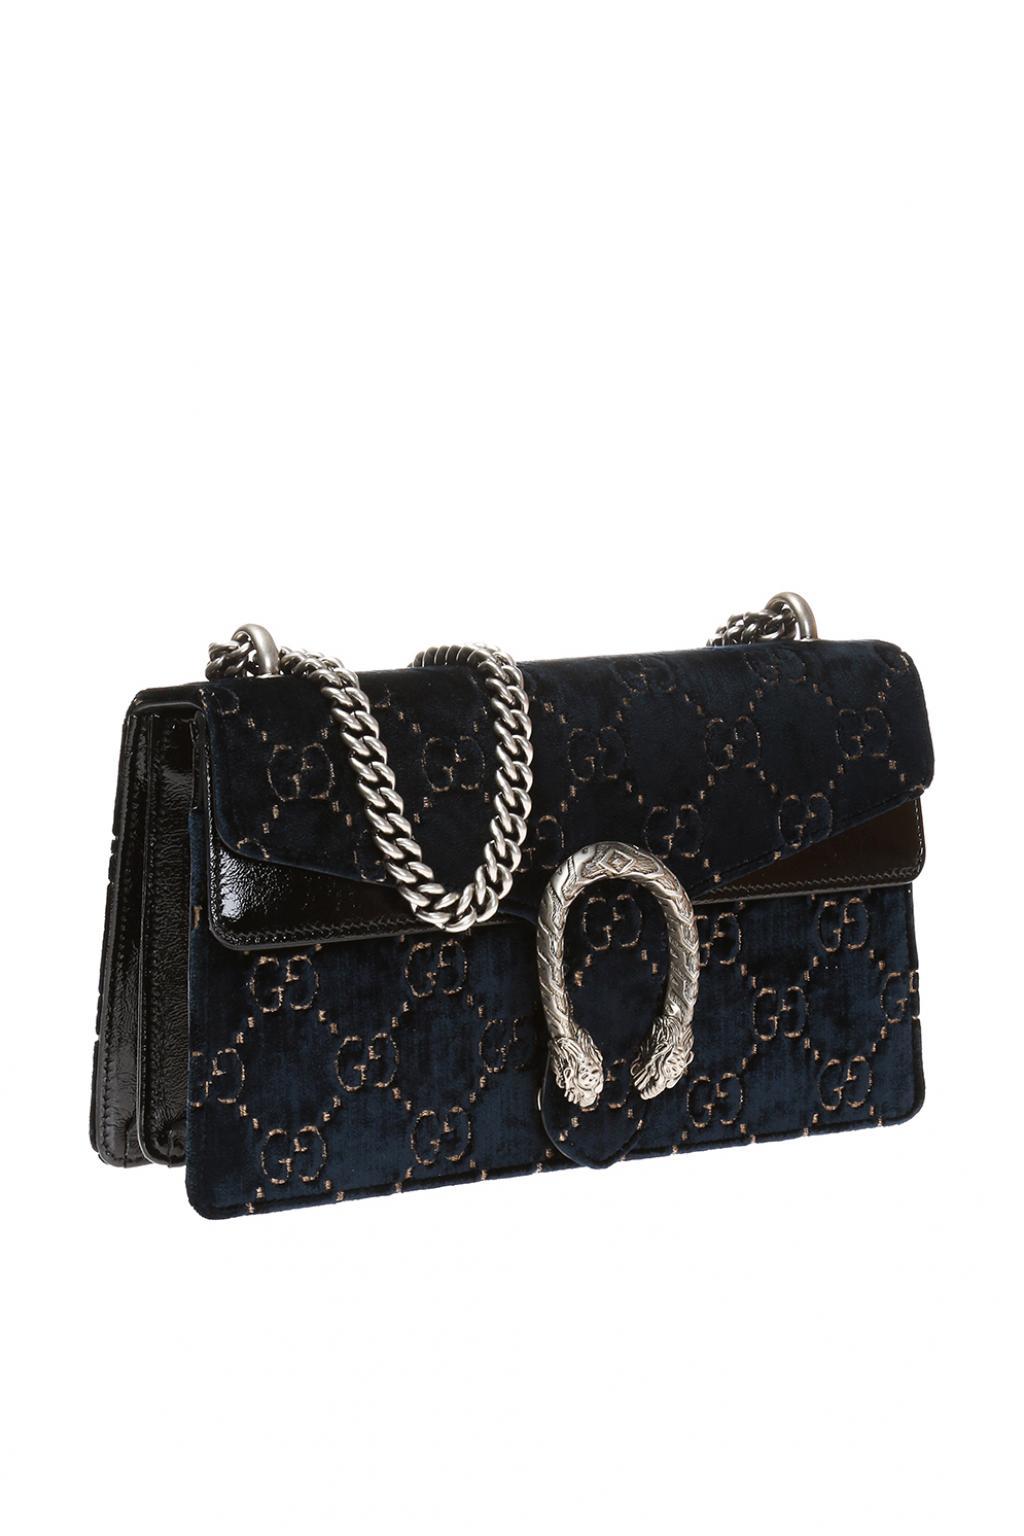 Gucci Dionysus Gg Small Velvet & Leather Shoulder Bag in Blue | Lyst